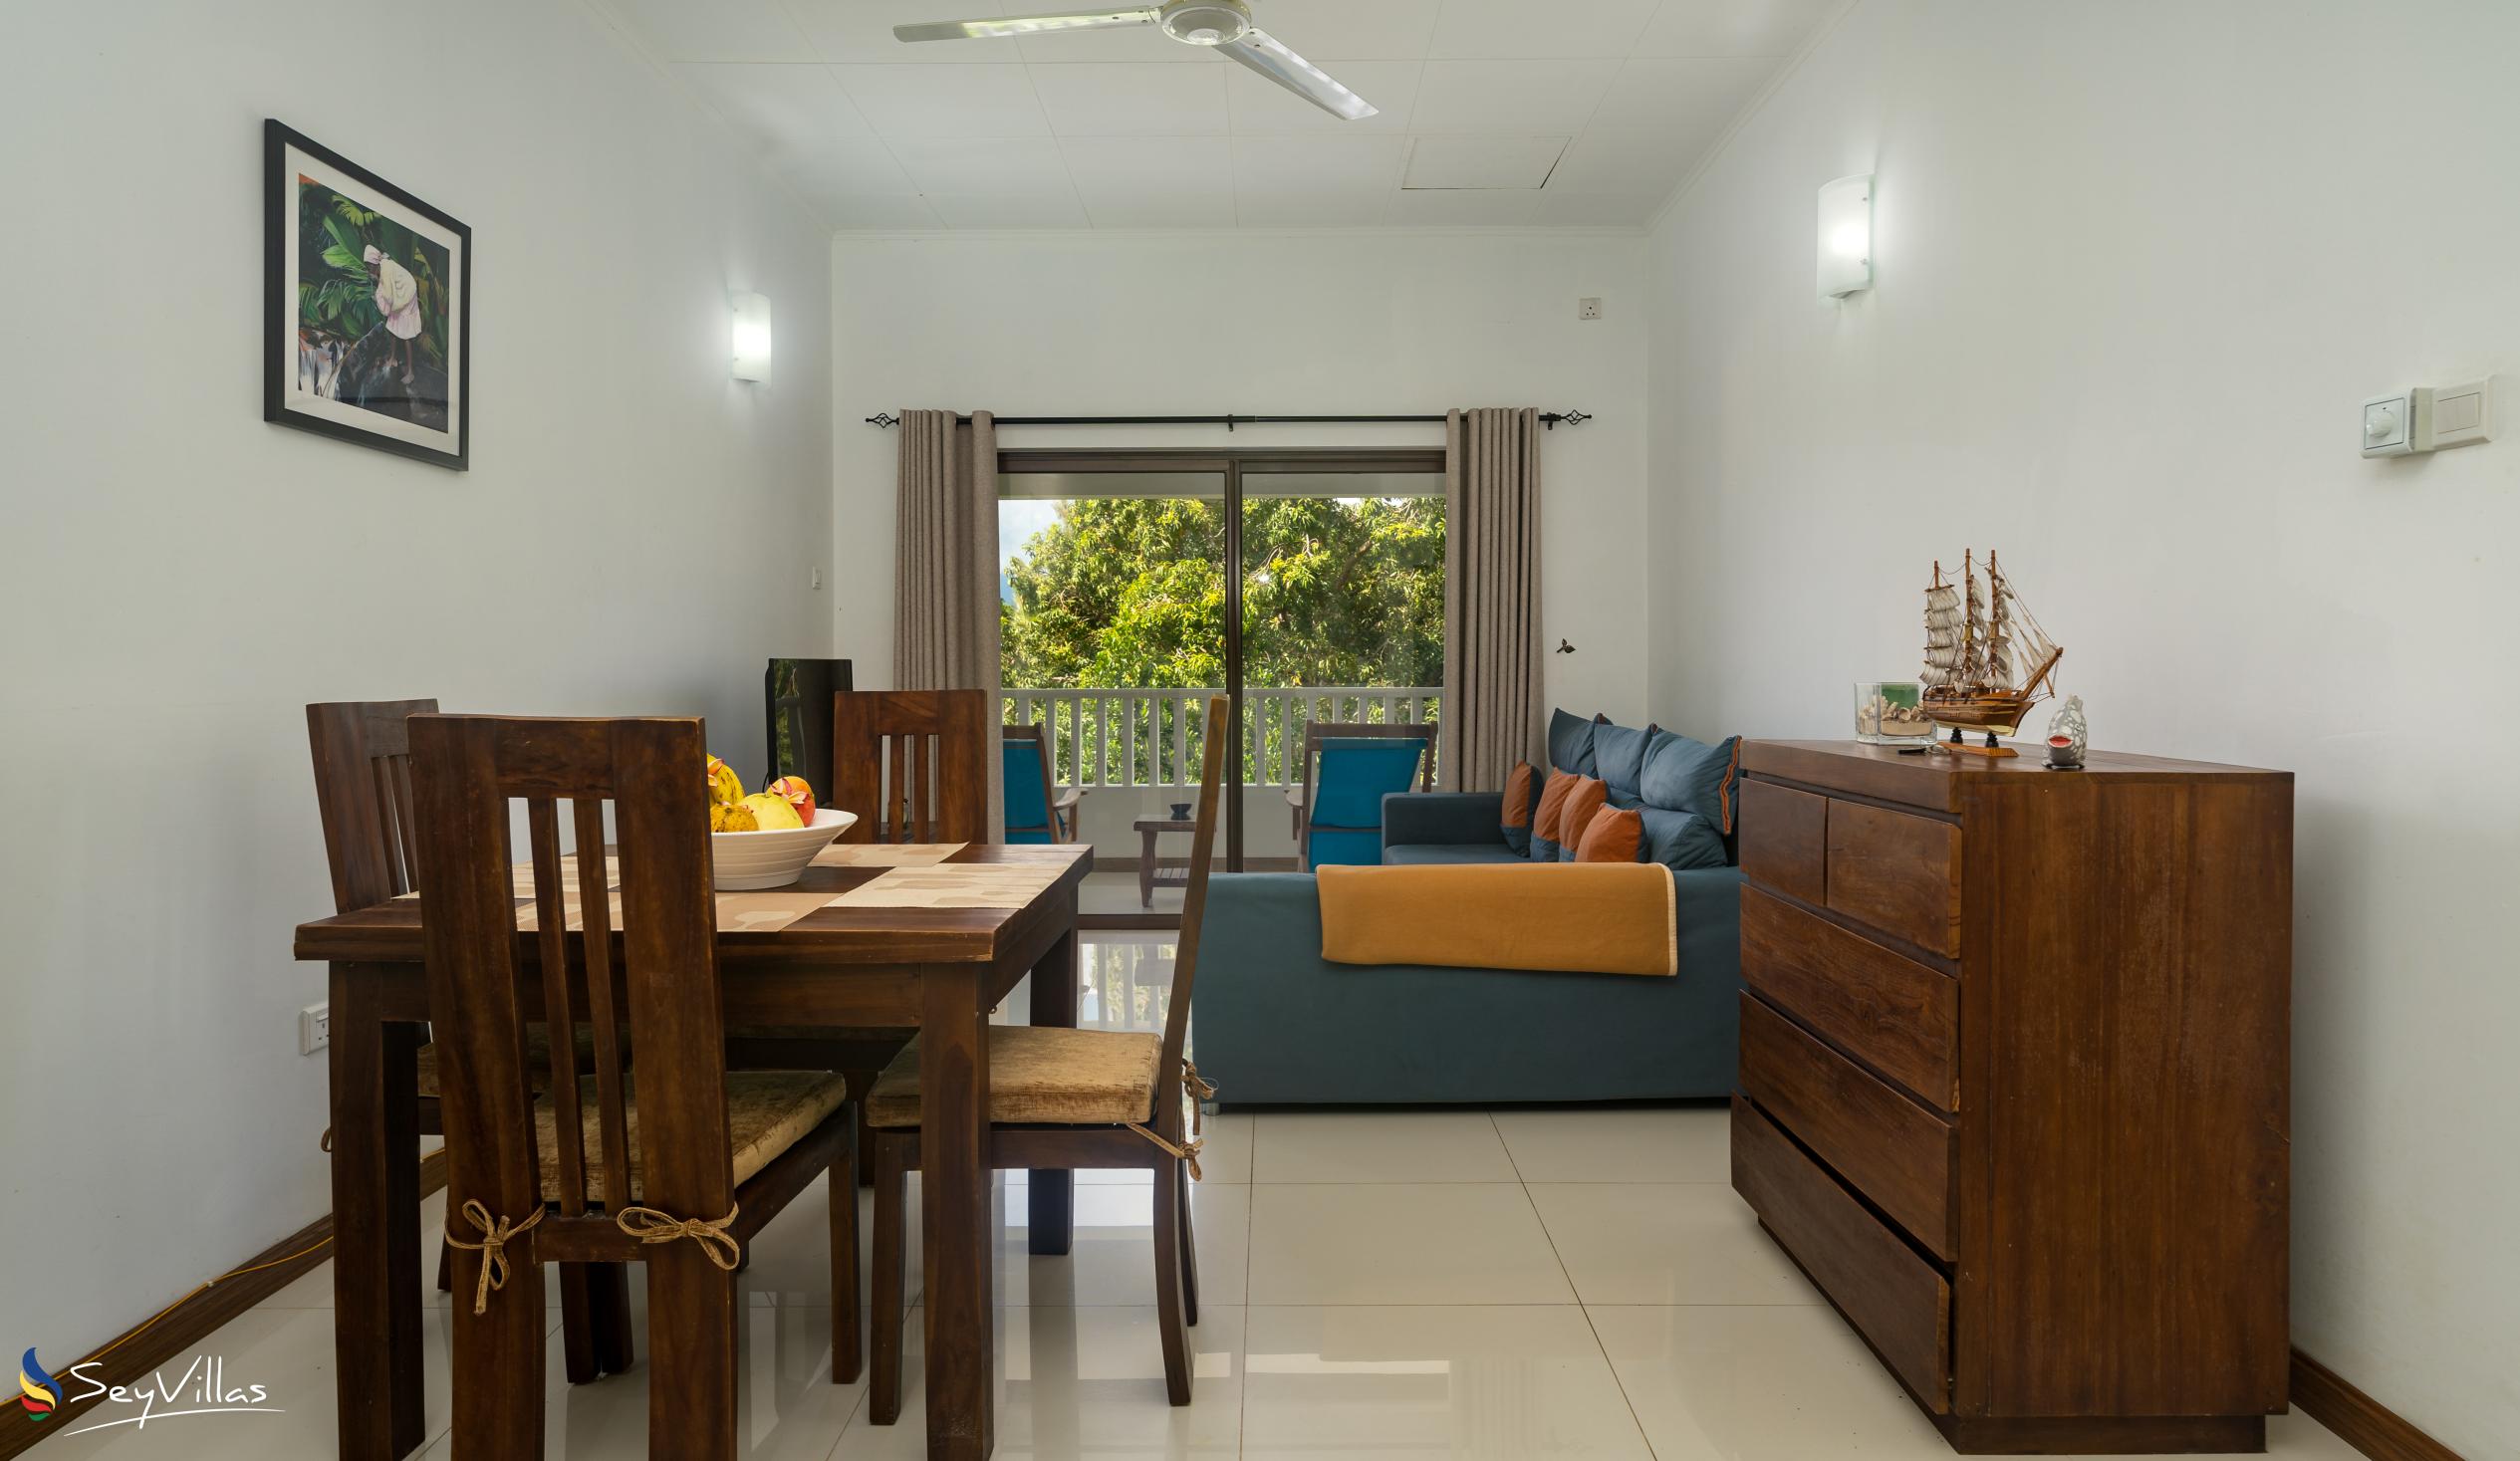 Photo 68: Kanasuk Self Catering Apartments - 1-Bedroom Apartment Tamarin - Mahé (Seychelles)